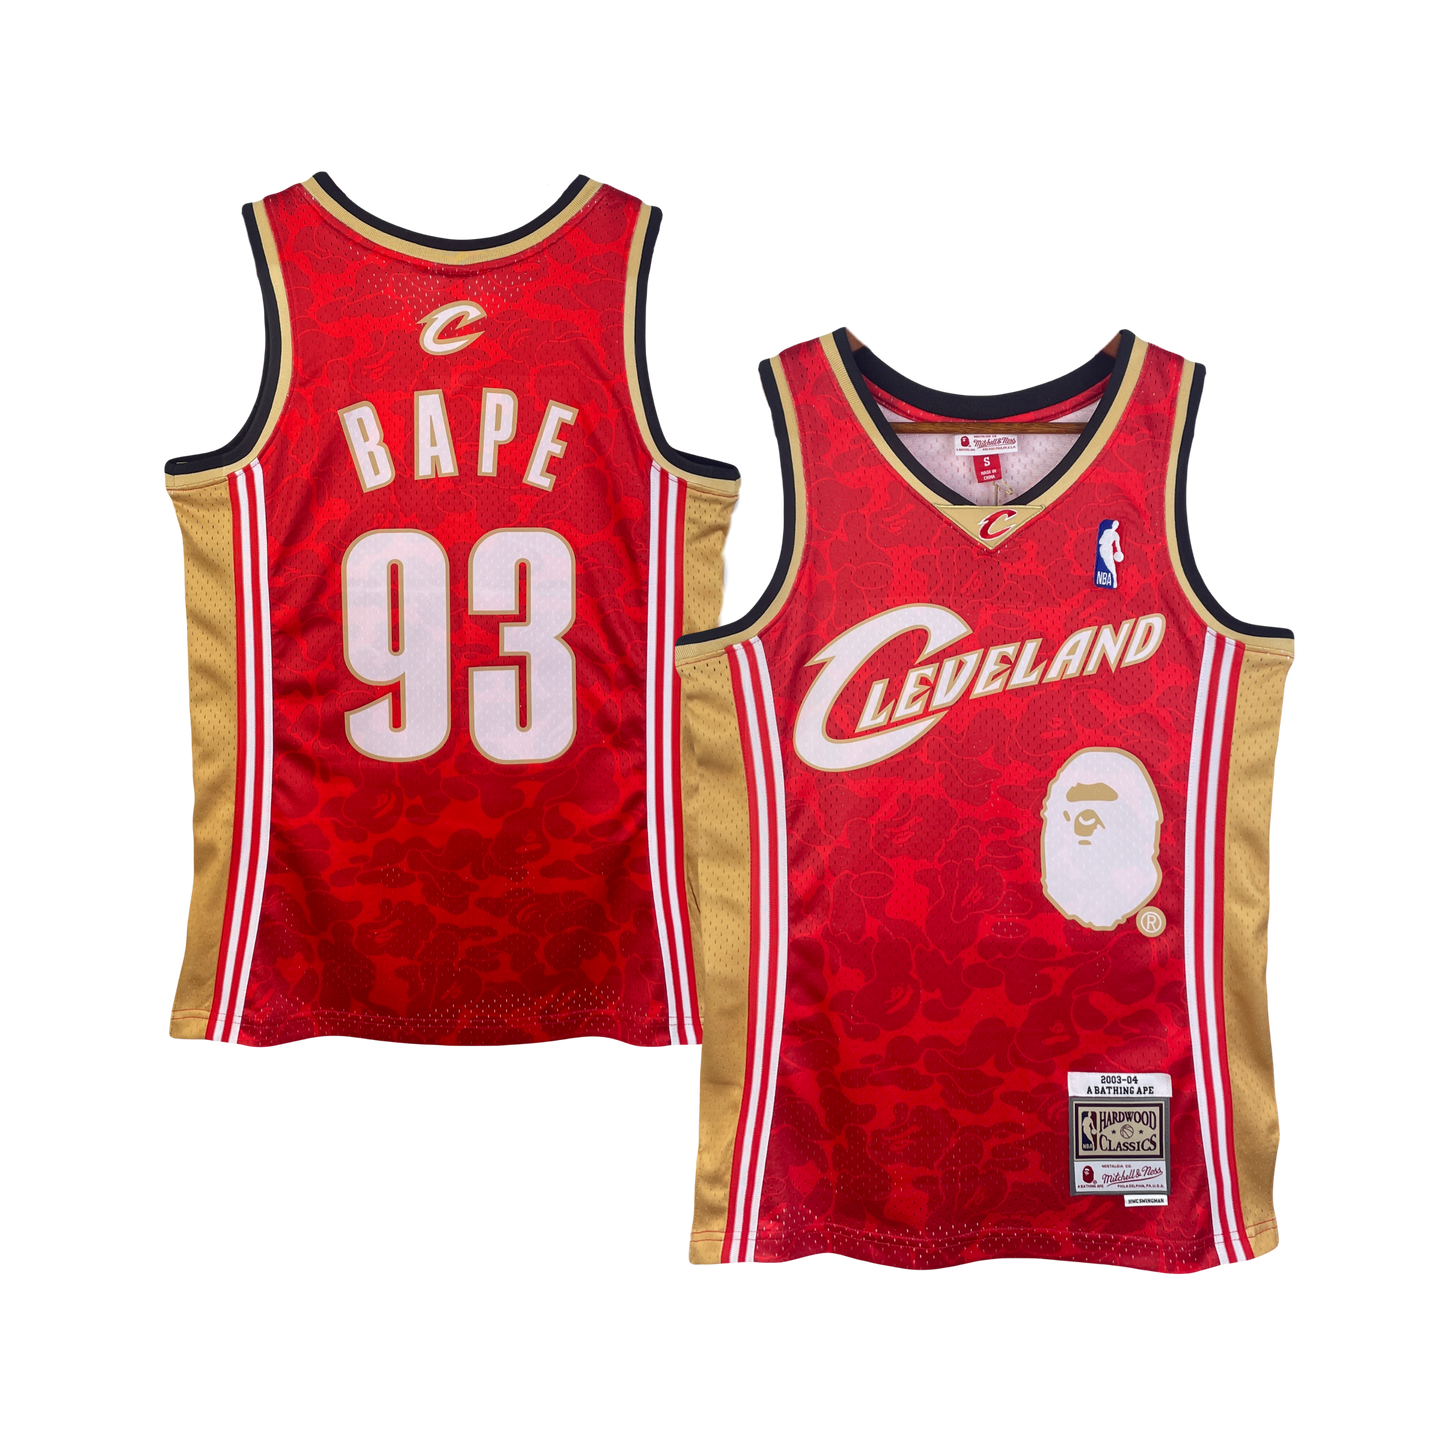 ‘A Bathing Ape’ (Bape) Brand NBA Cleveland Cavaliers Hardwood Classic Mitchell & Ness Red Jersey